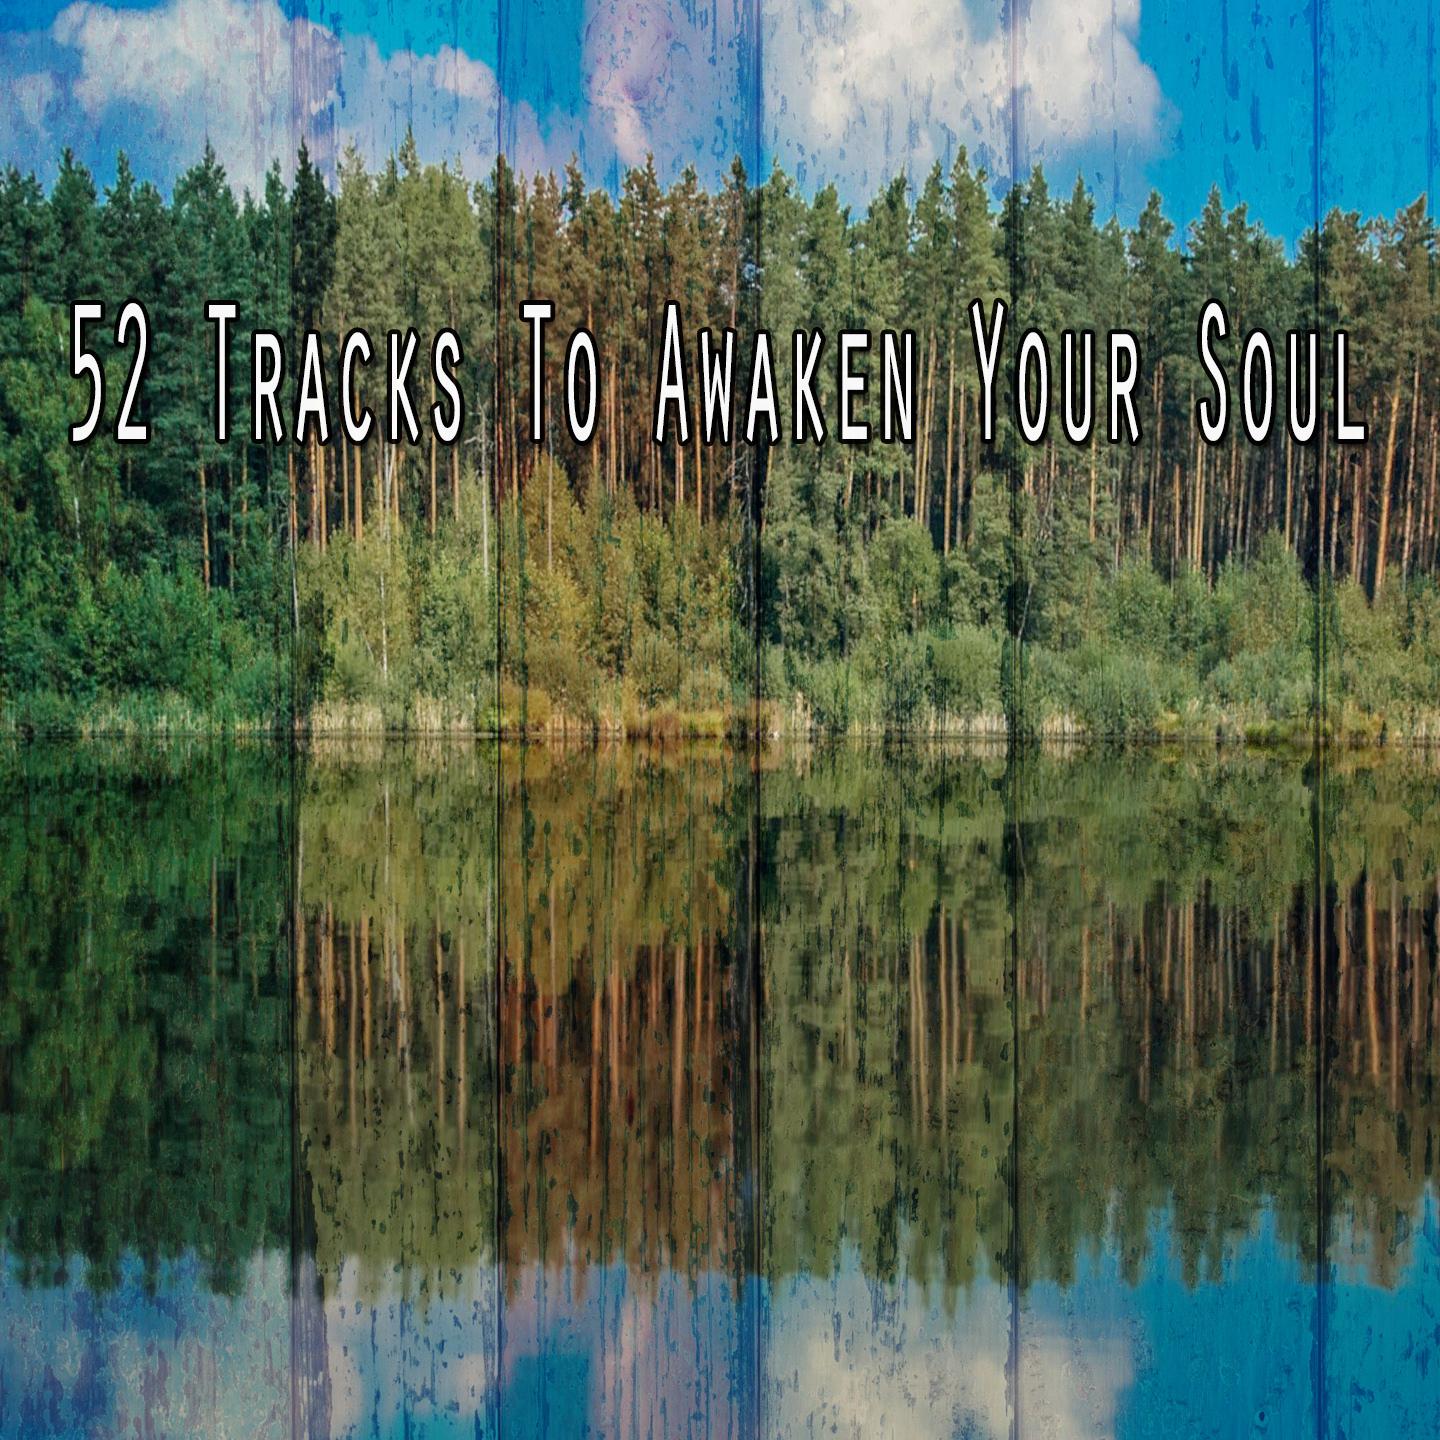 52 Tracks to Awaken Your Soul